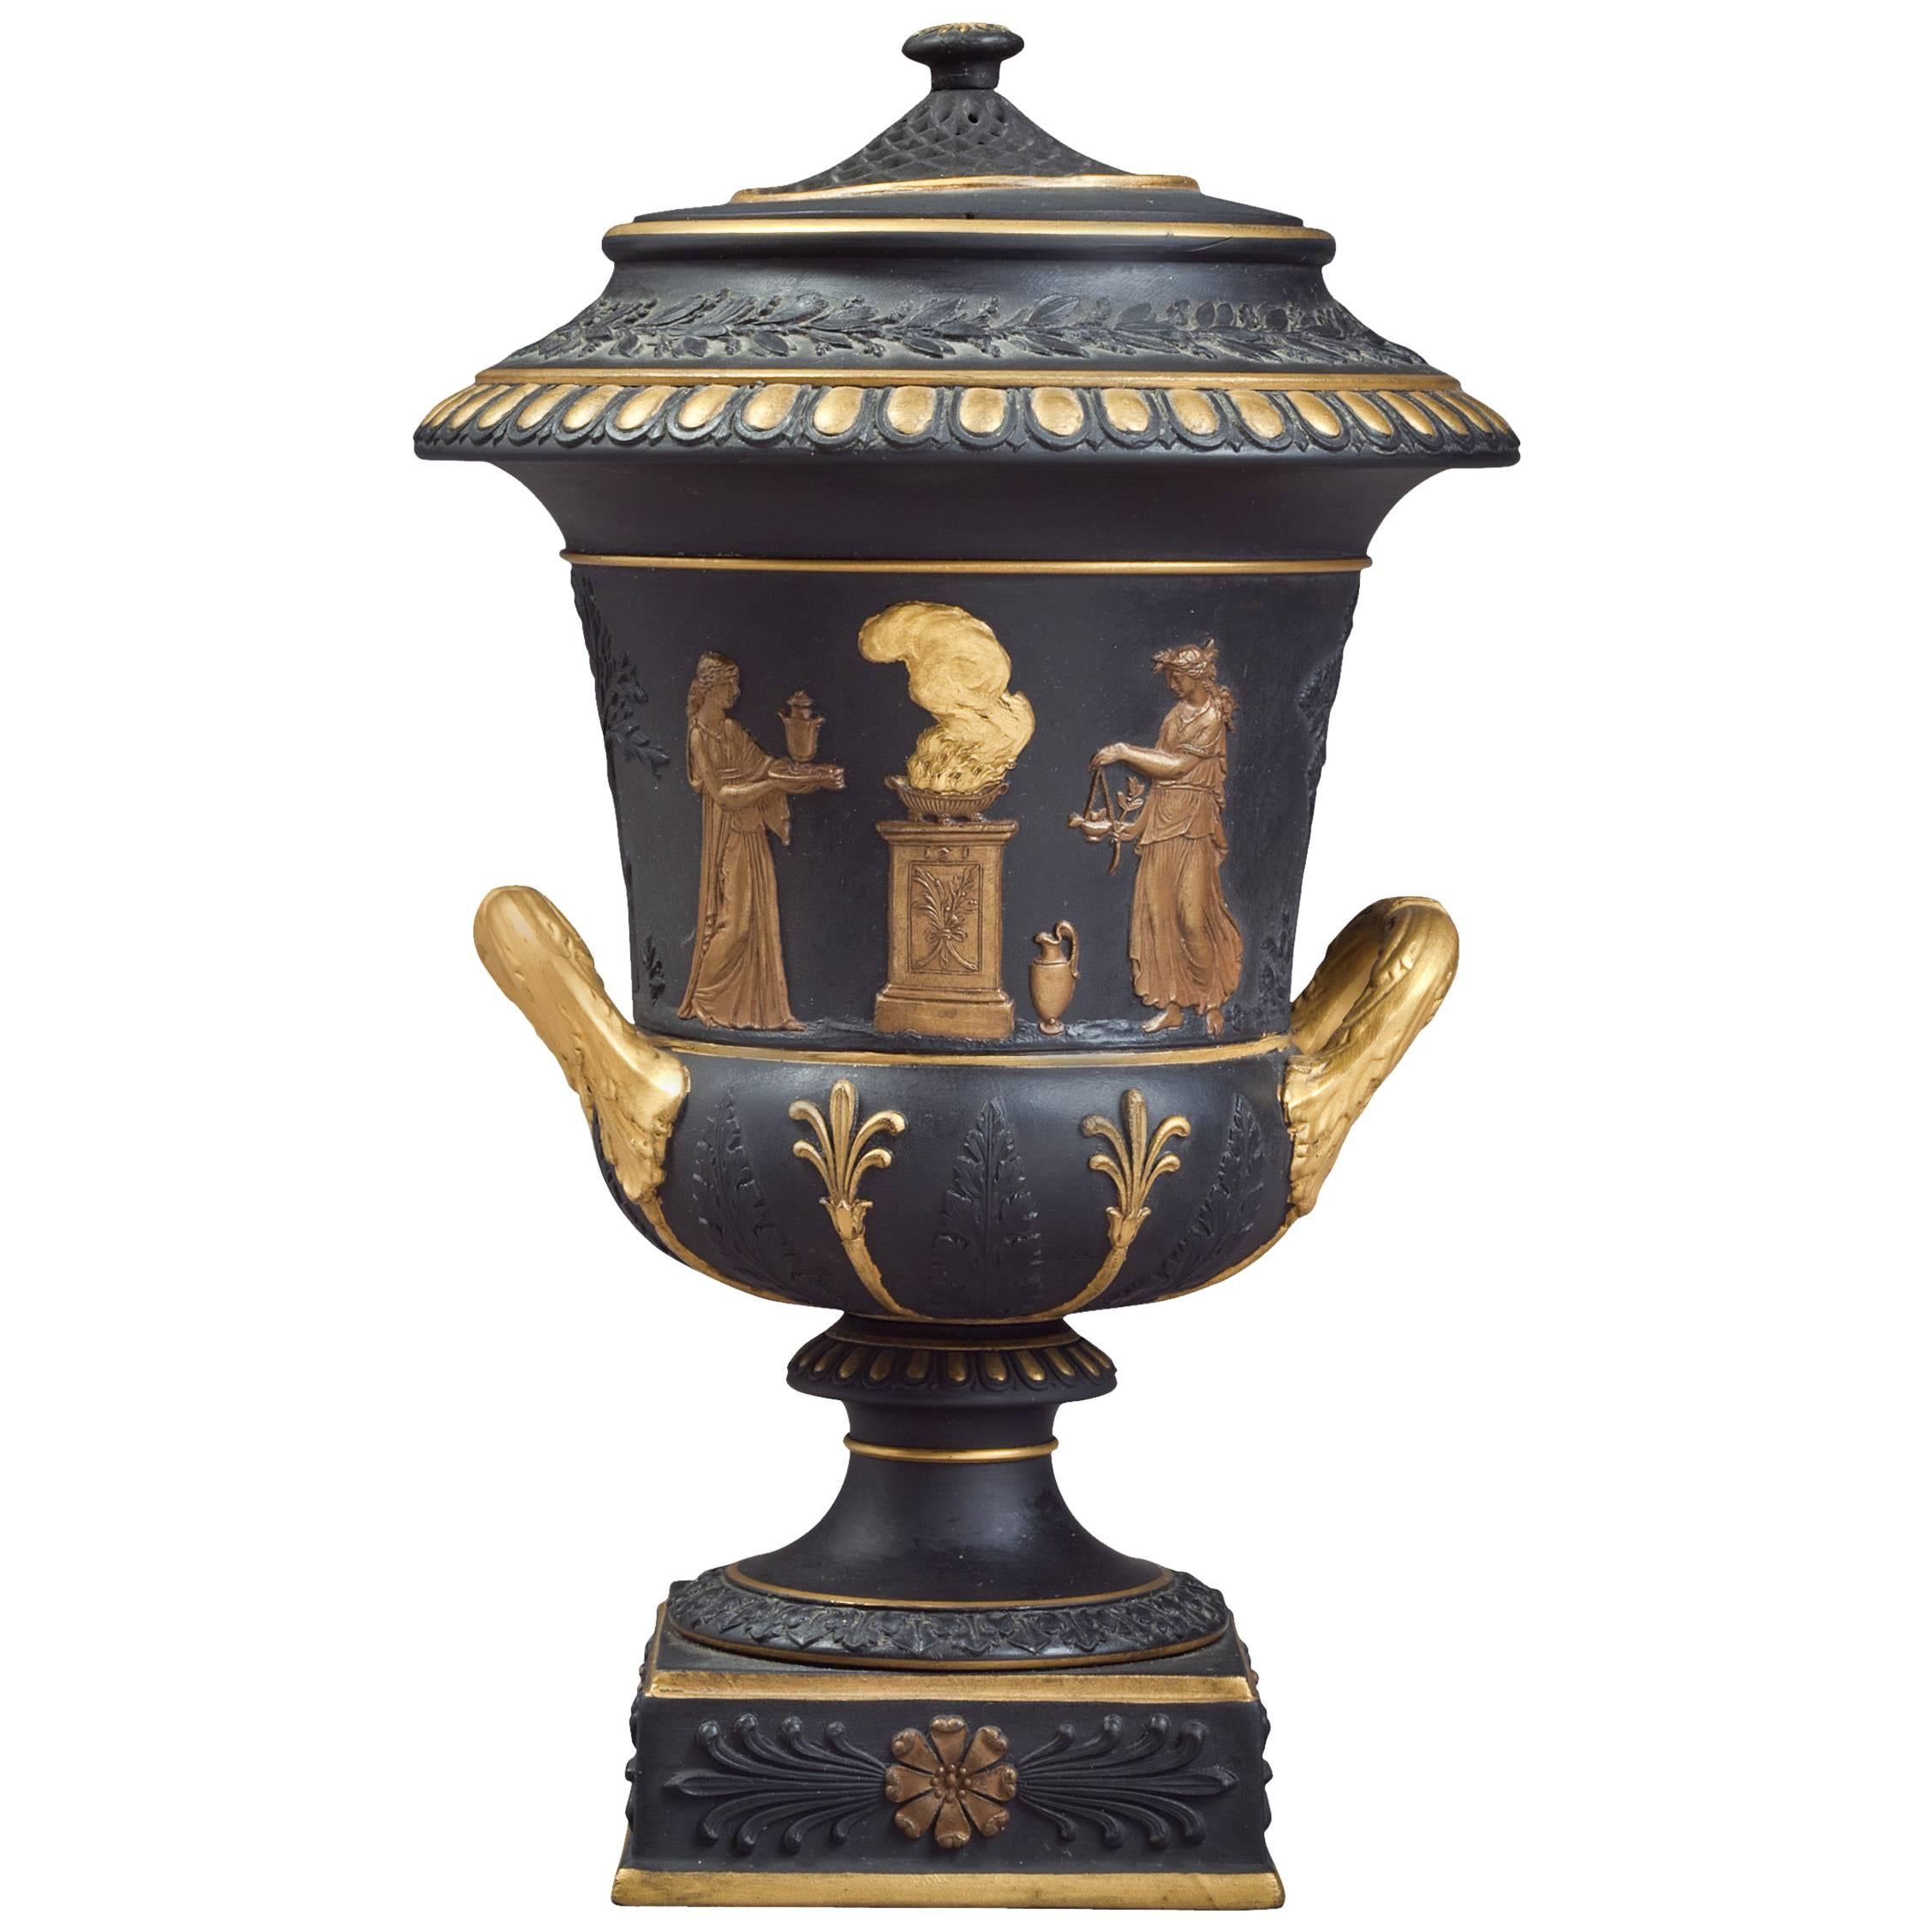 Wedgwood Black and Gilt Basalt Covered Potpourri Vase, circa 1870